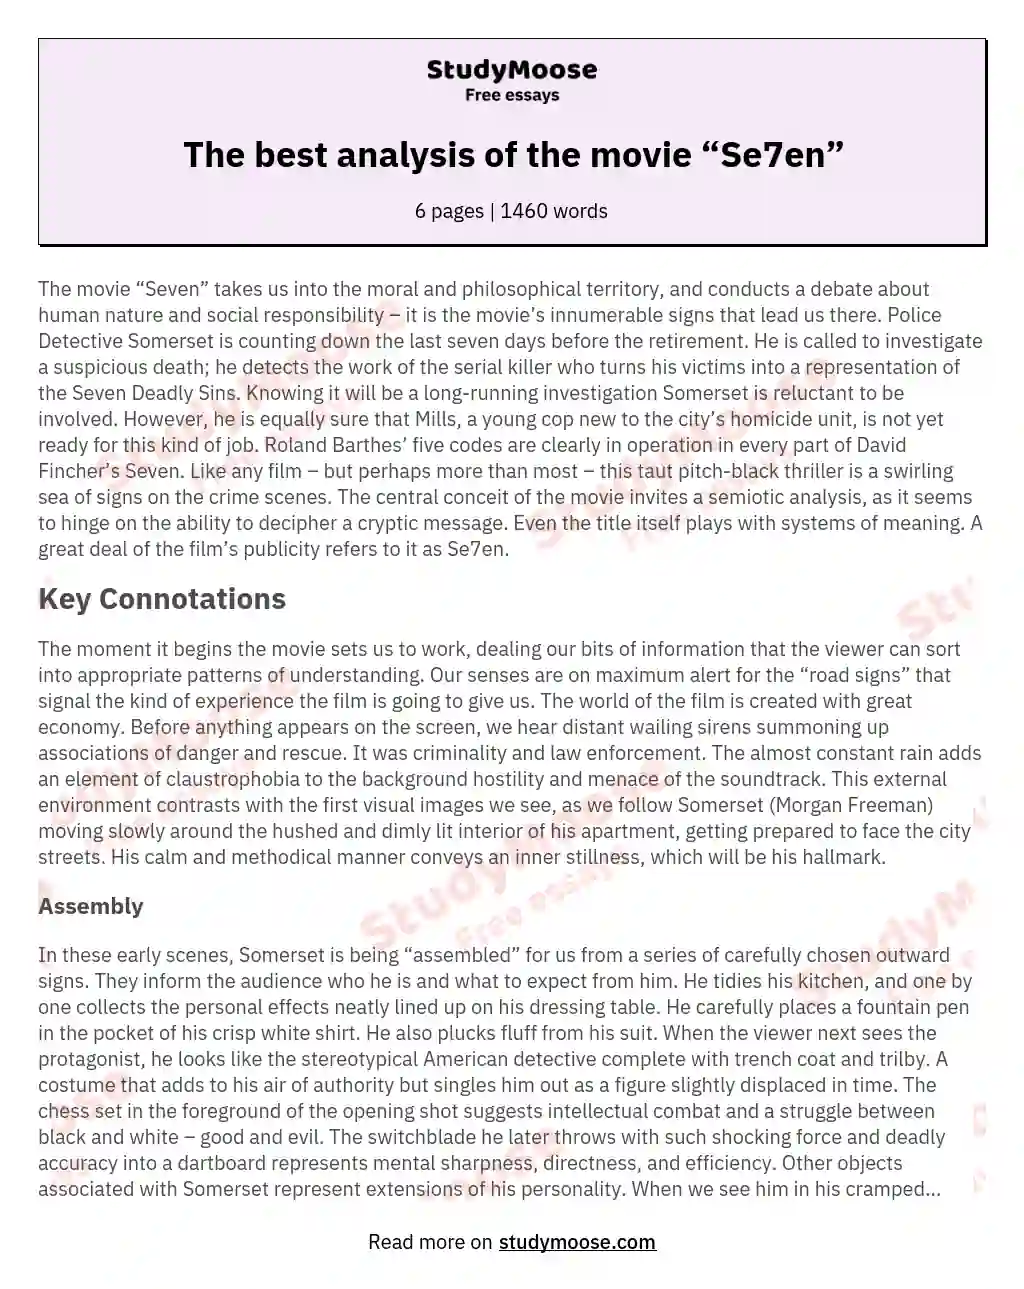 The best analysis of the movie “Se7en” essay